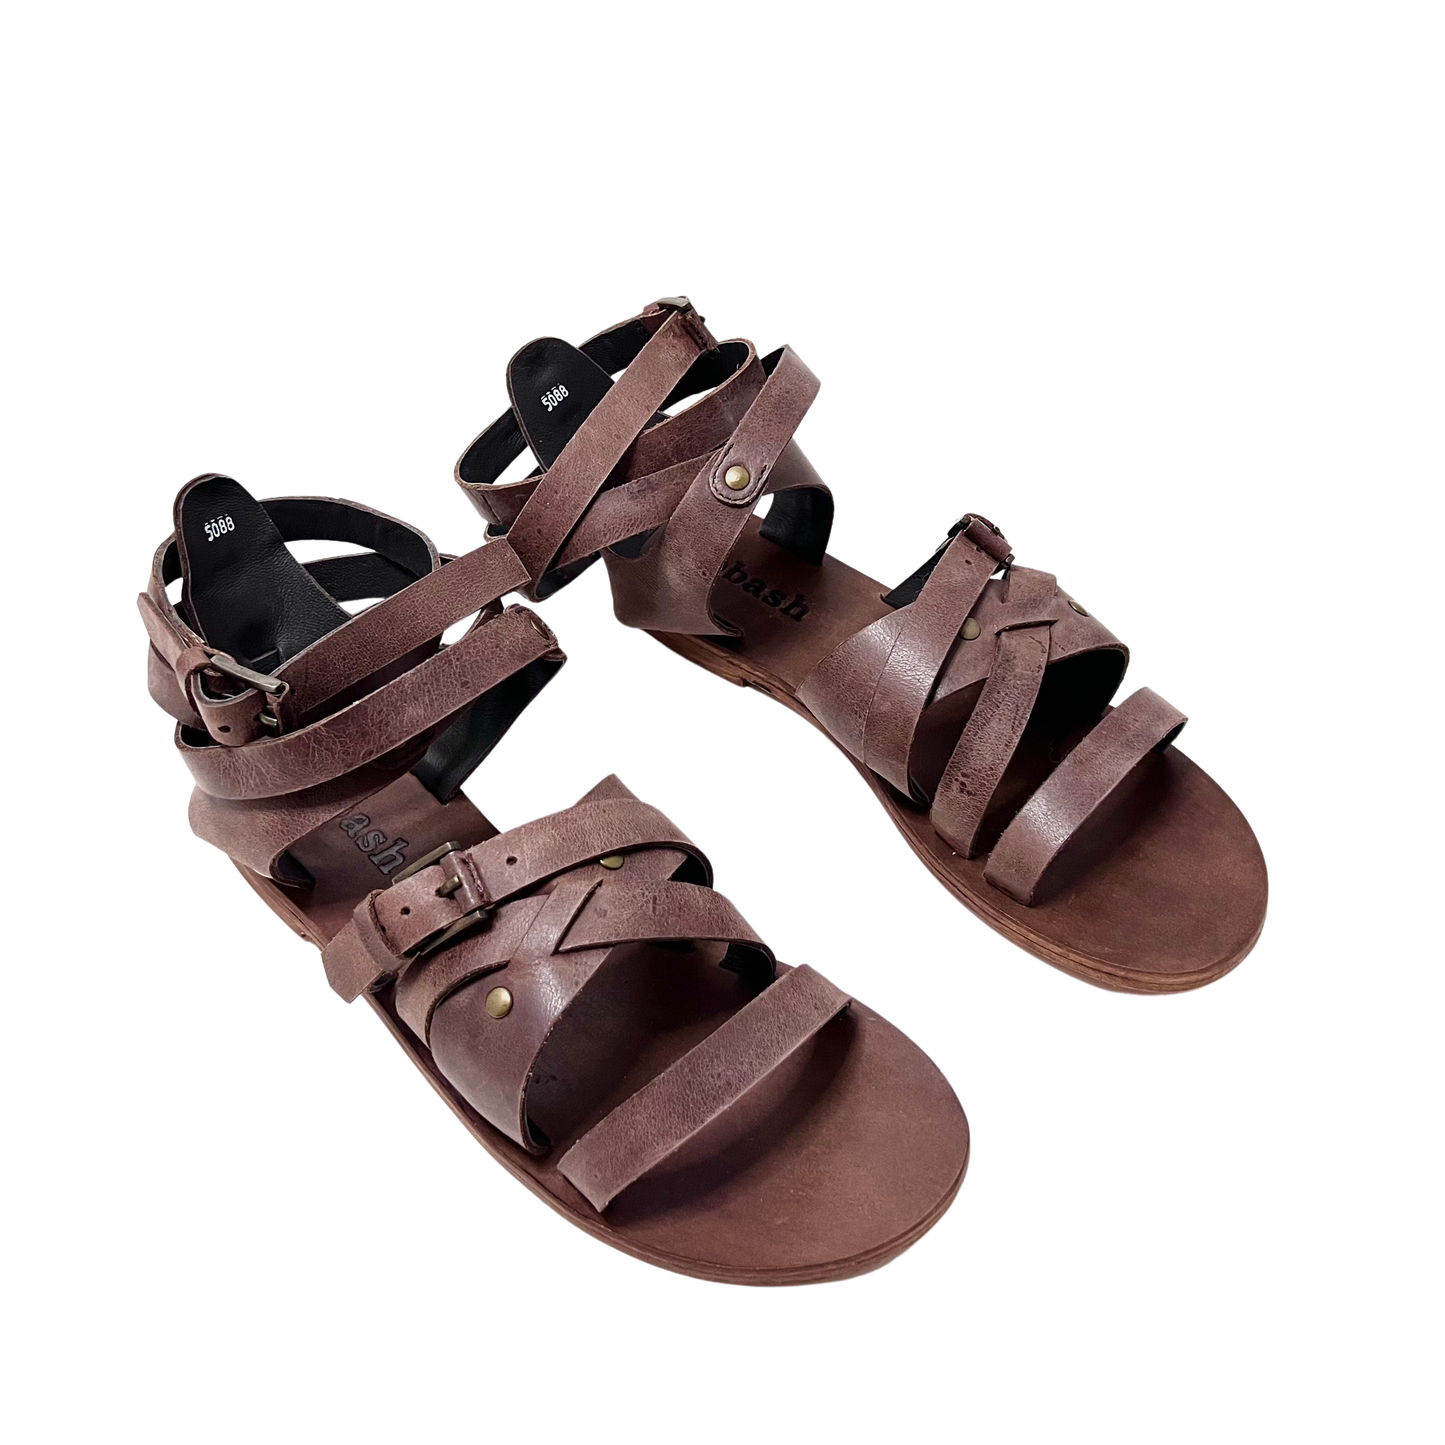 brown color leather gladiator ladies sandal